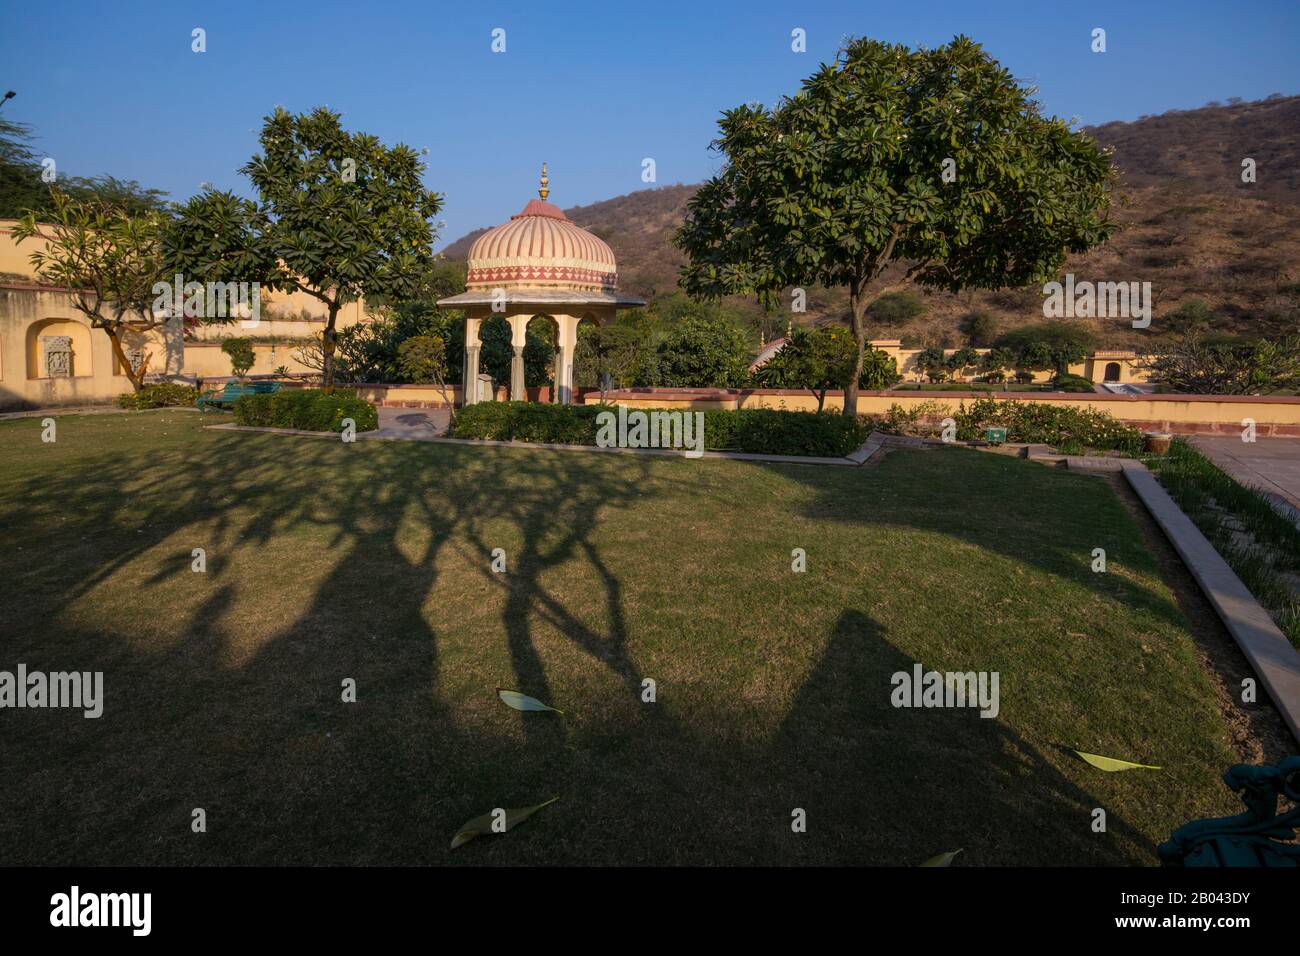 shishodia garden at jaipur Stock Photo